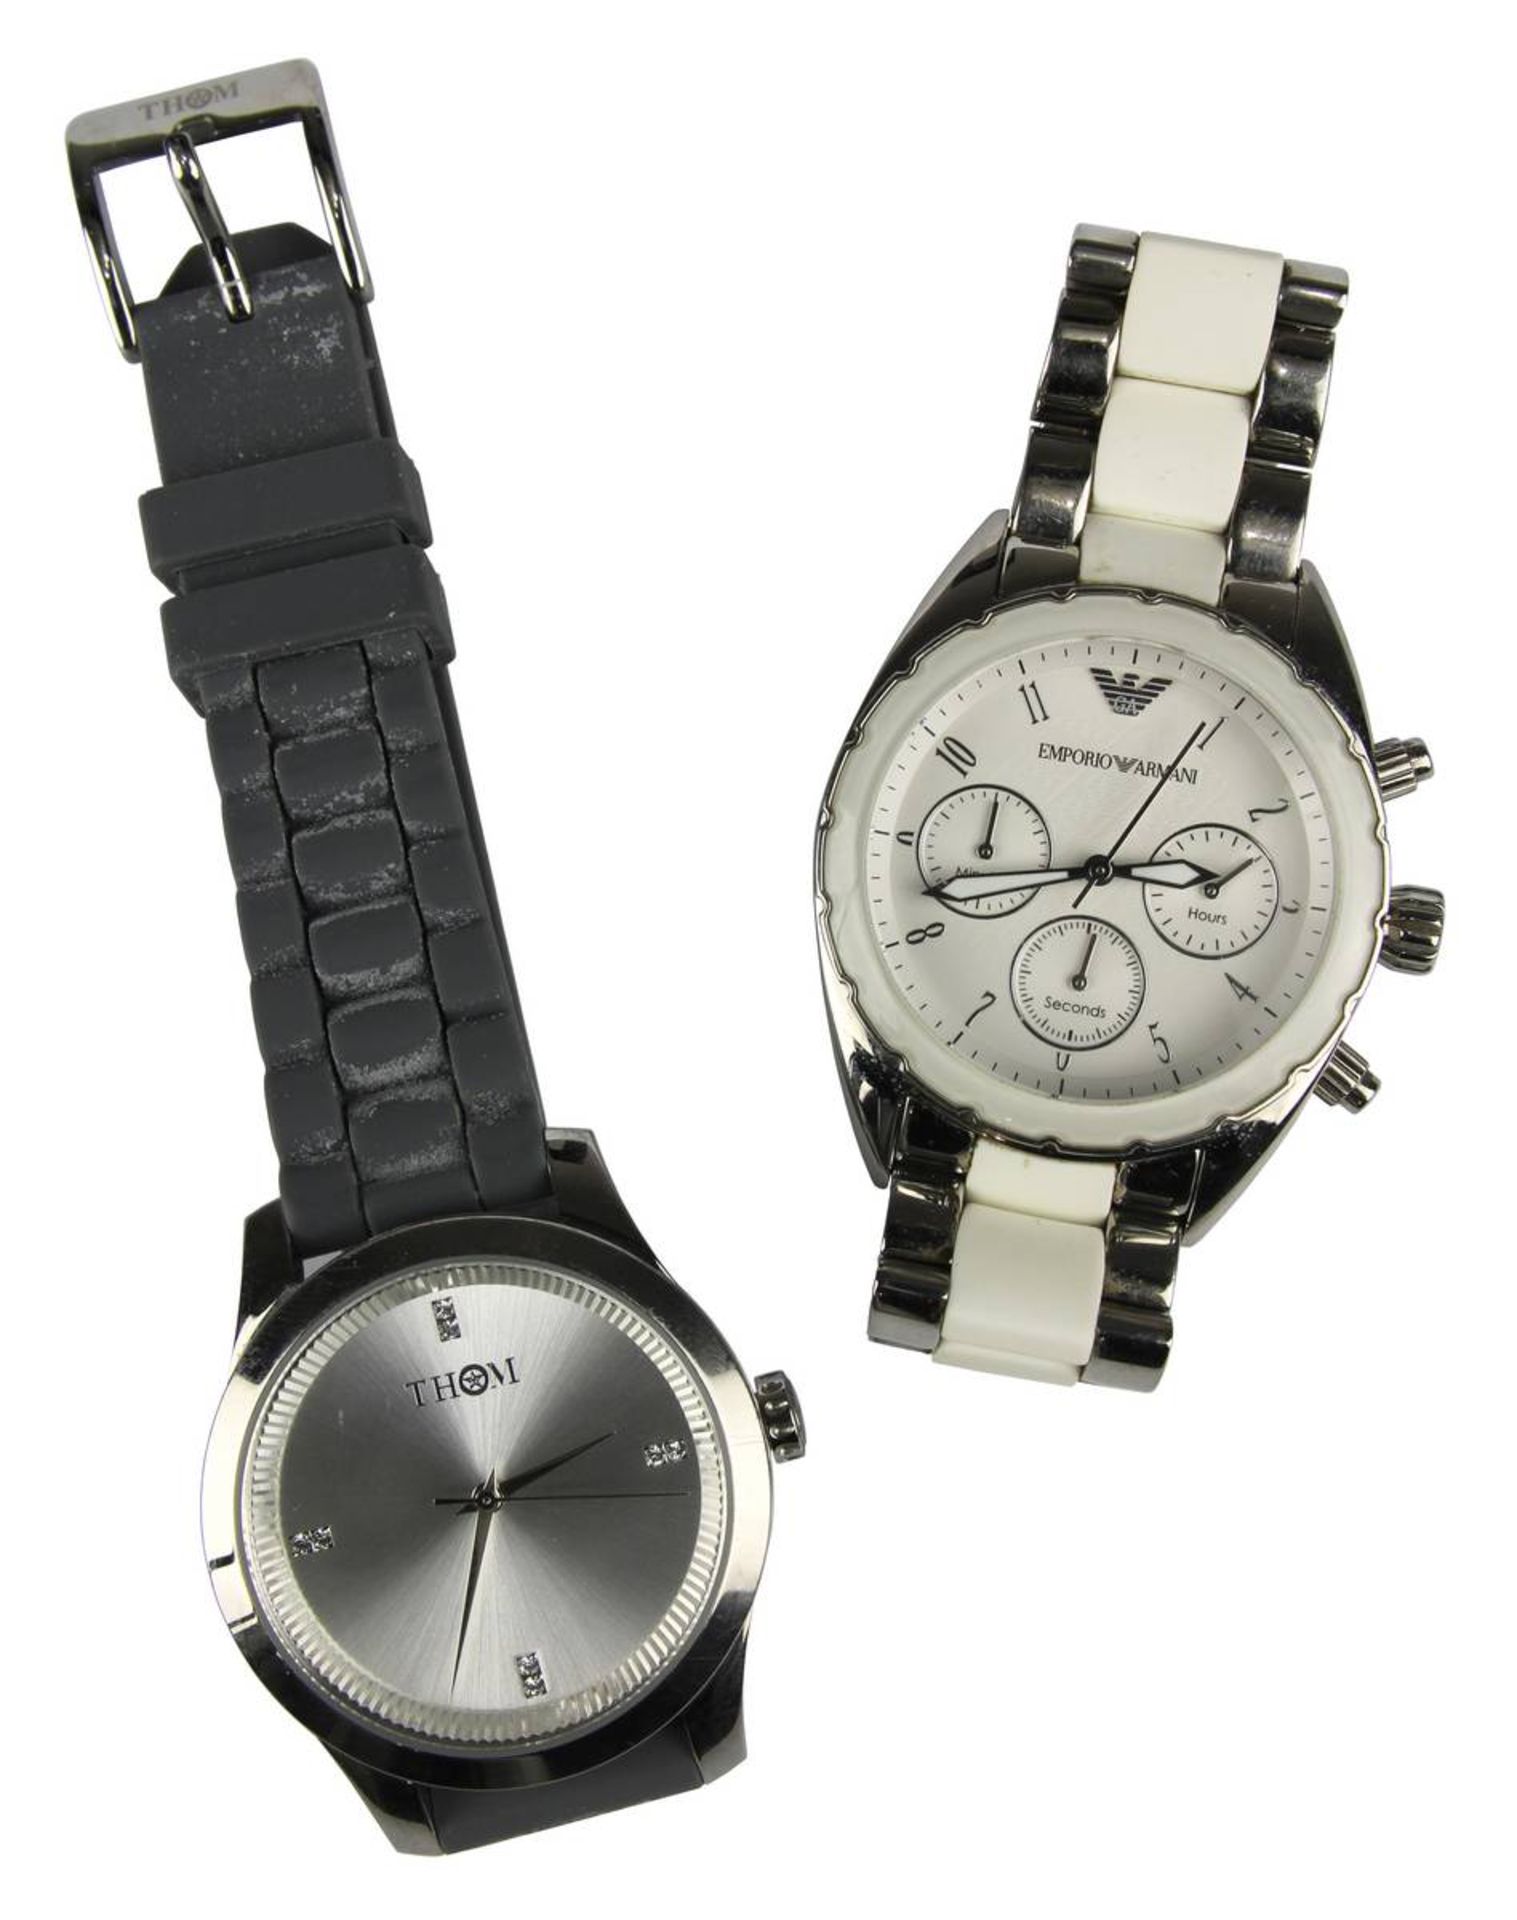 Eine Armani-Armbanduhr u. eine Thom-Armbanduhr: Armani-Herrenarmbanduhr, Chronograph, Quarz,